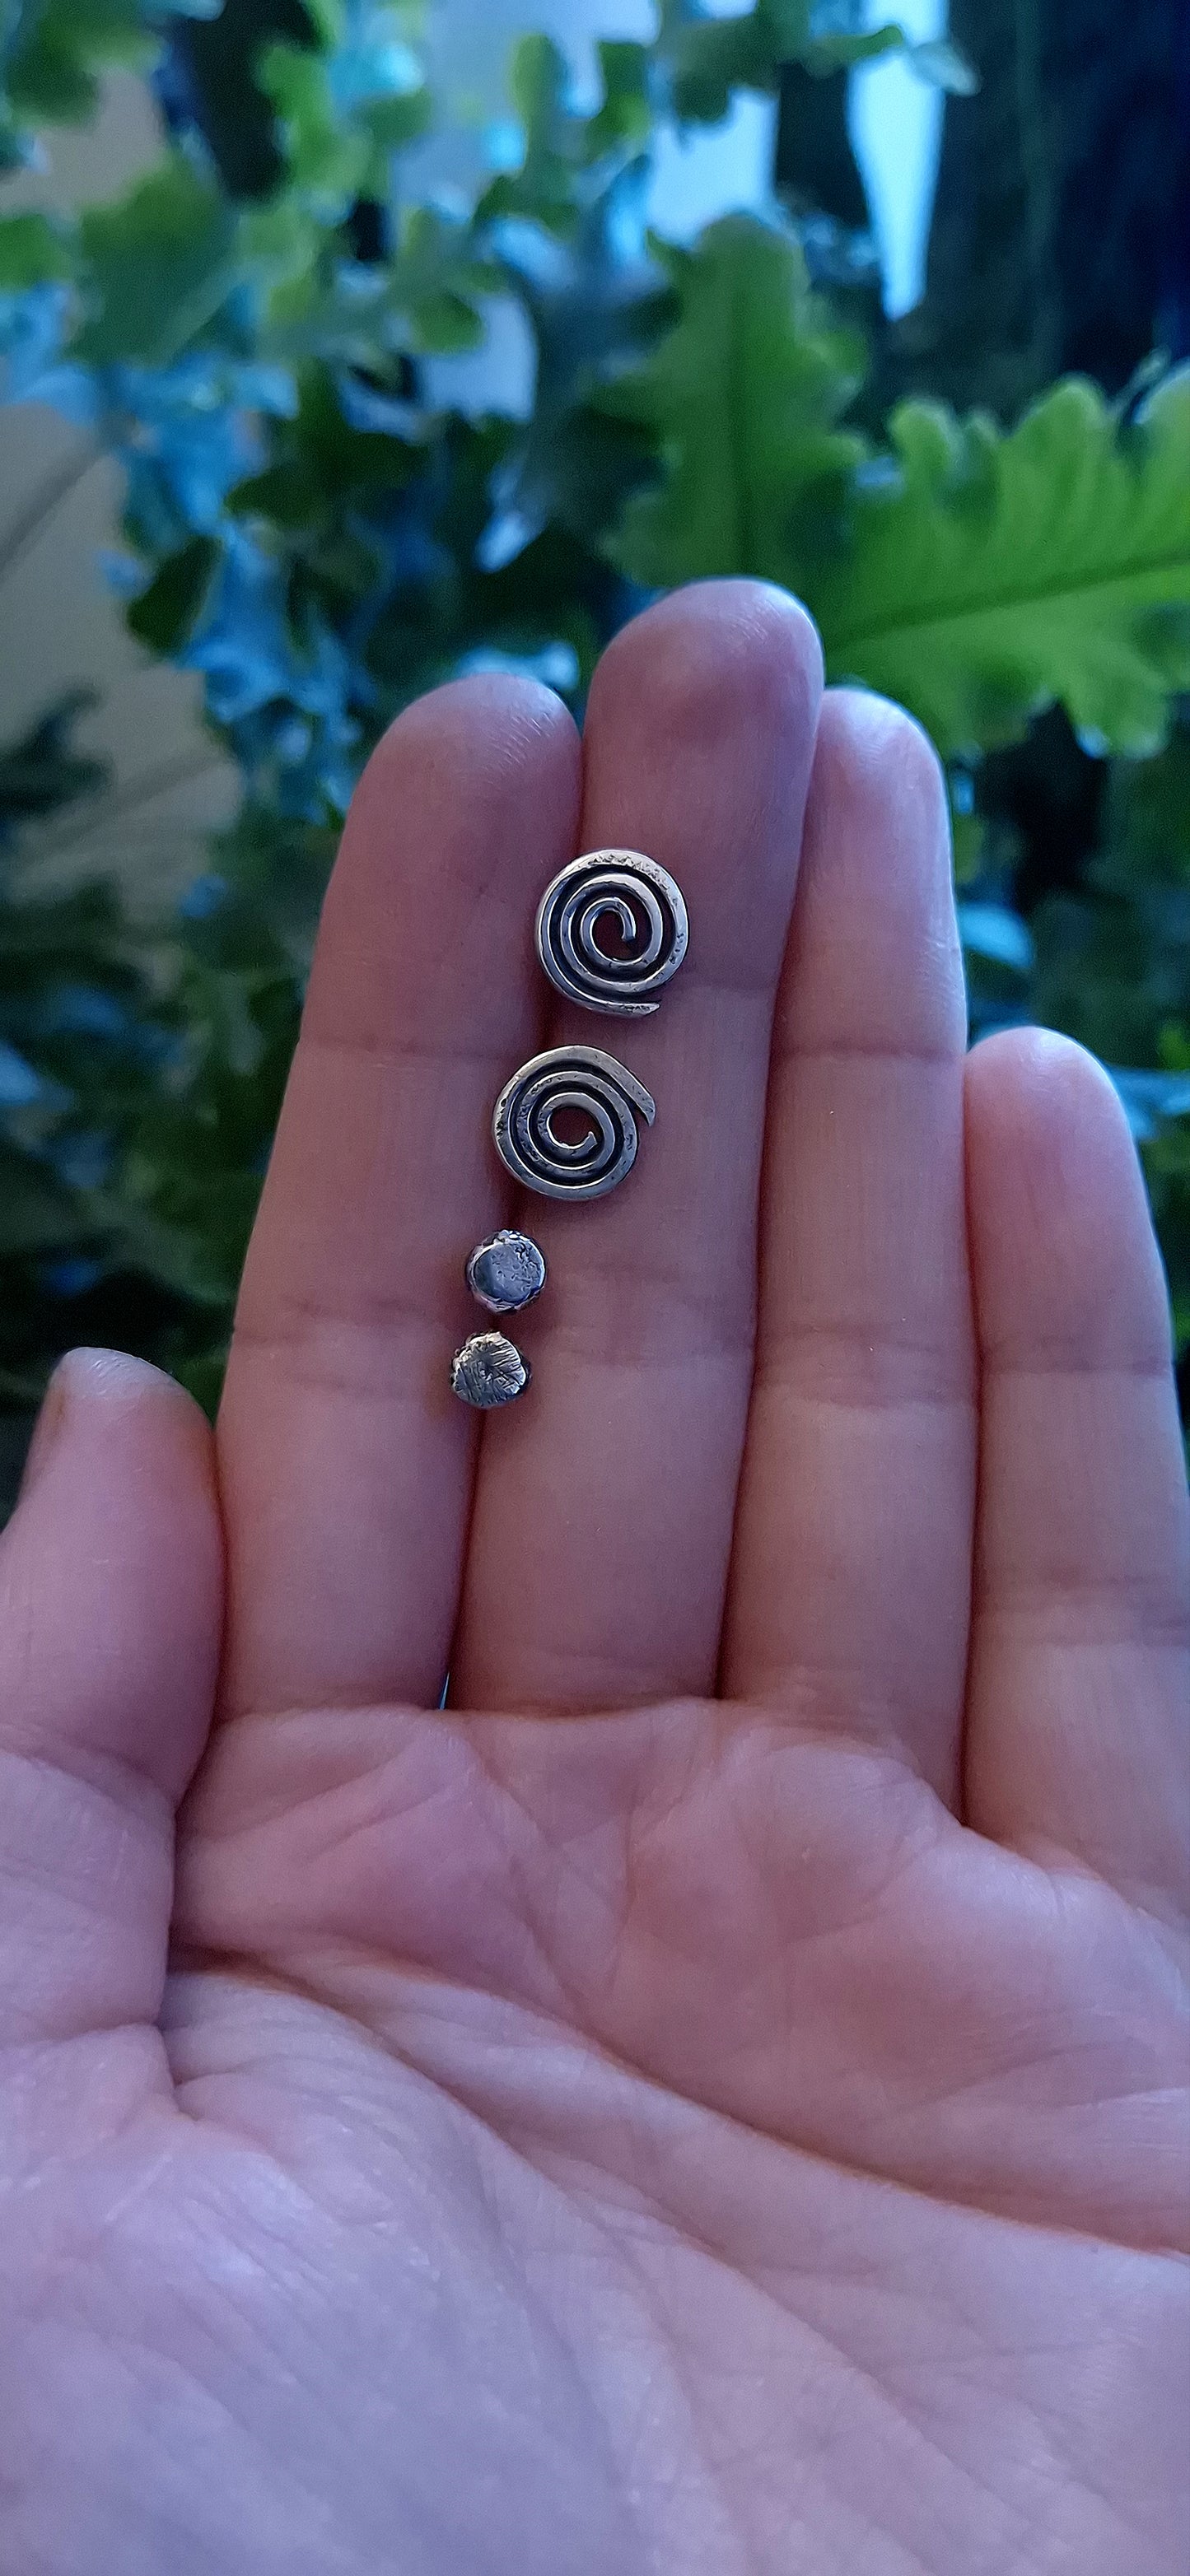 Primitive Spiral Earrings